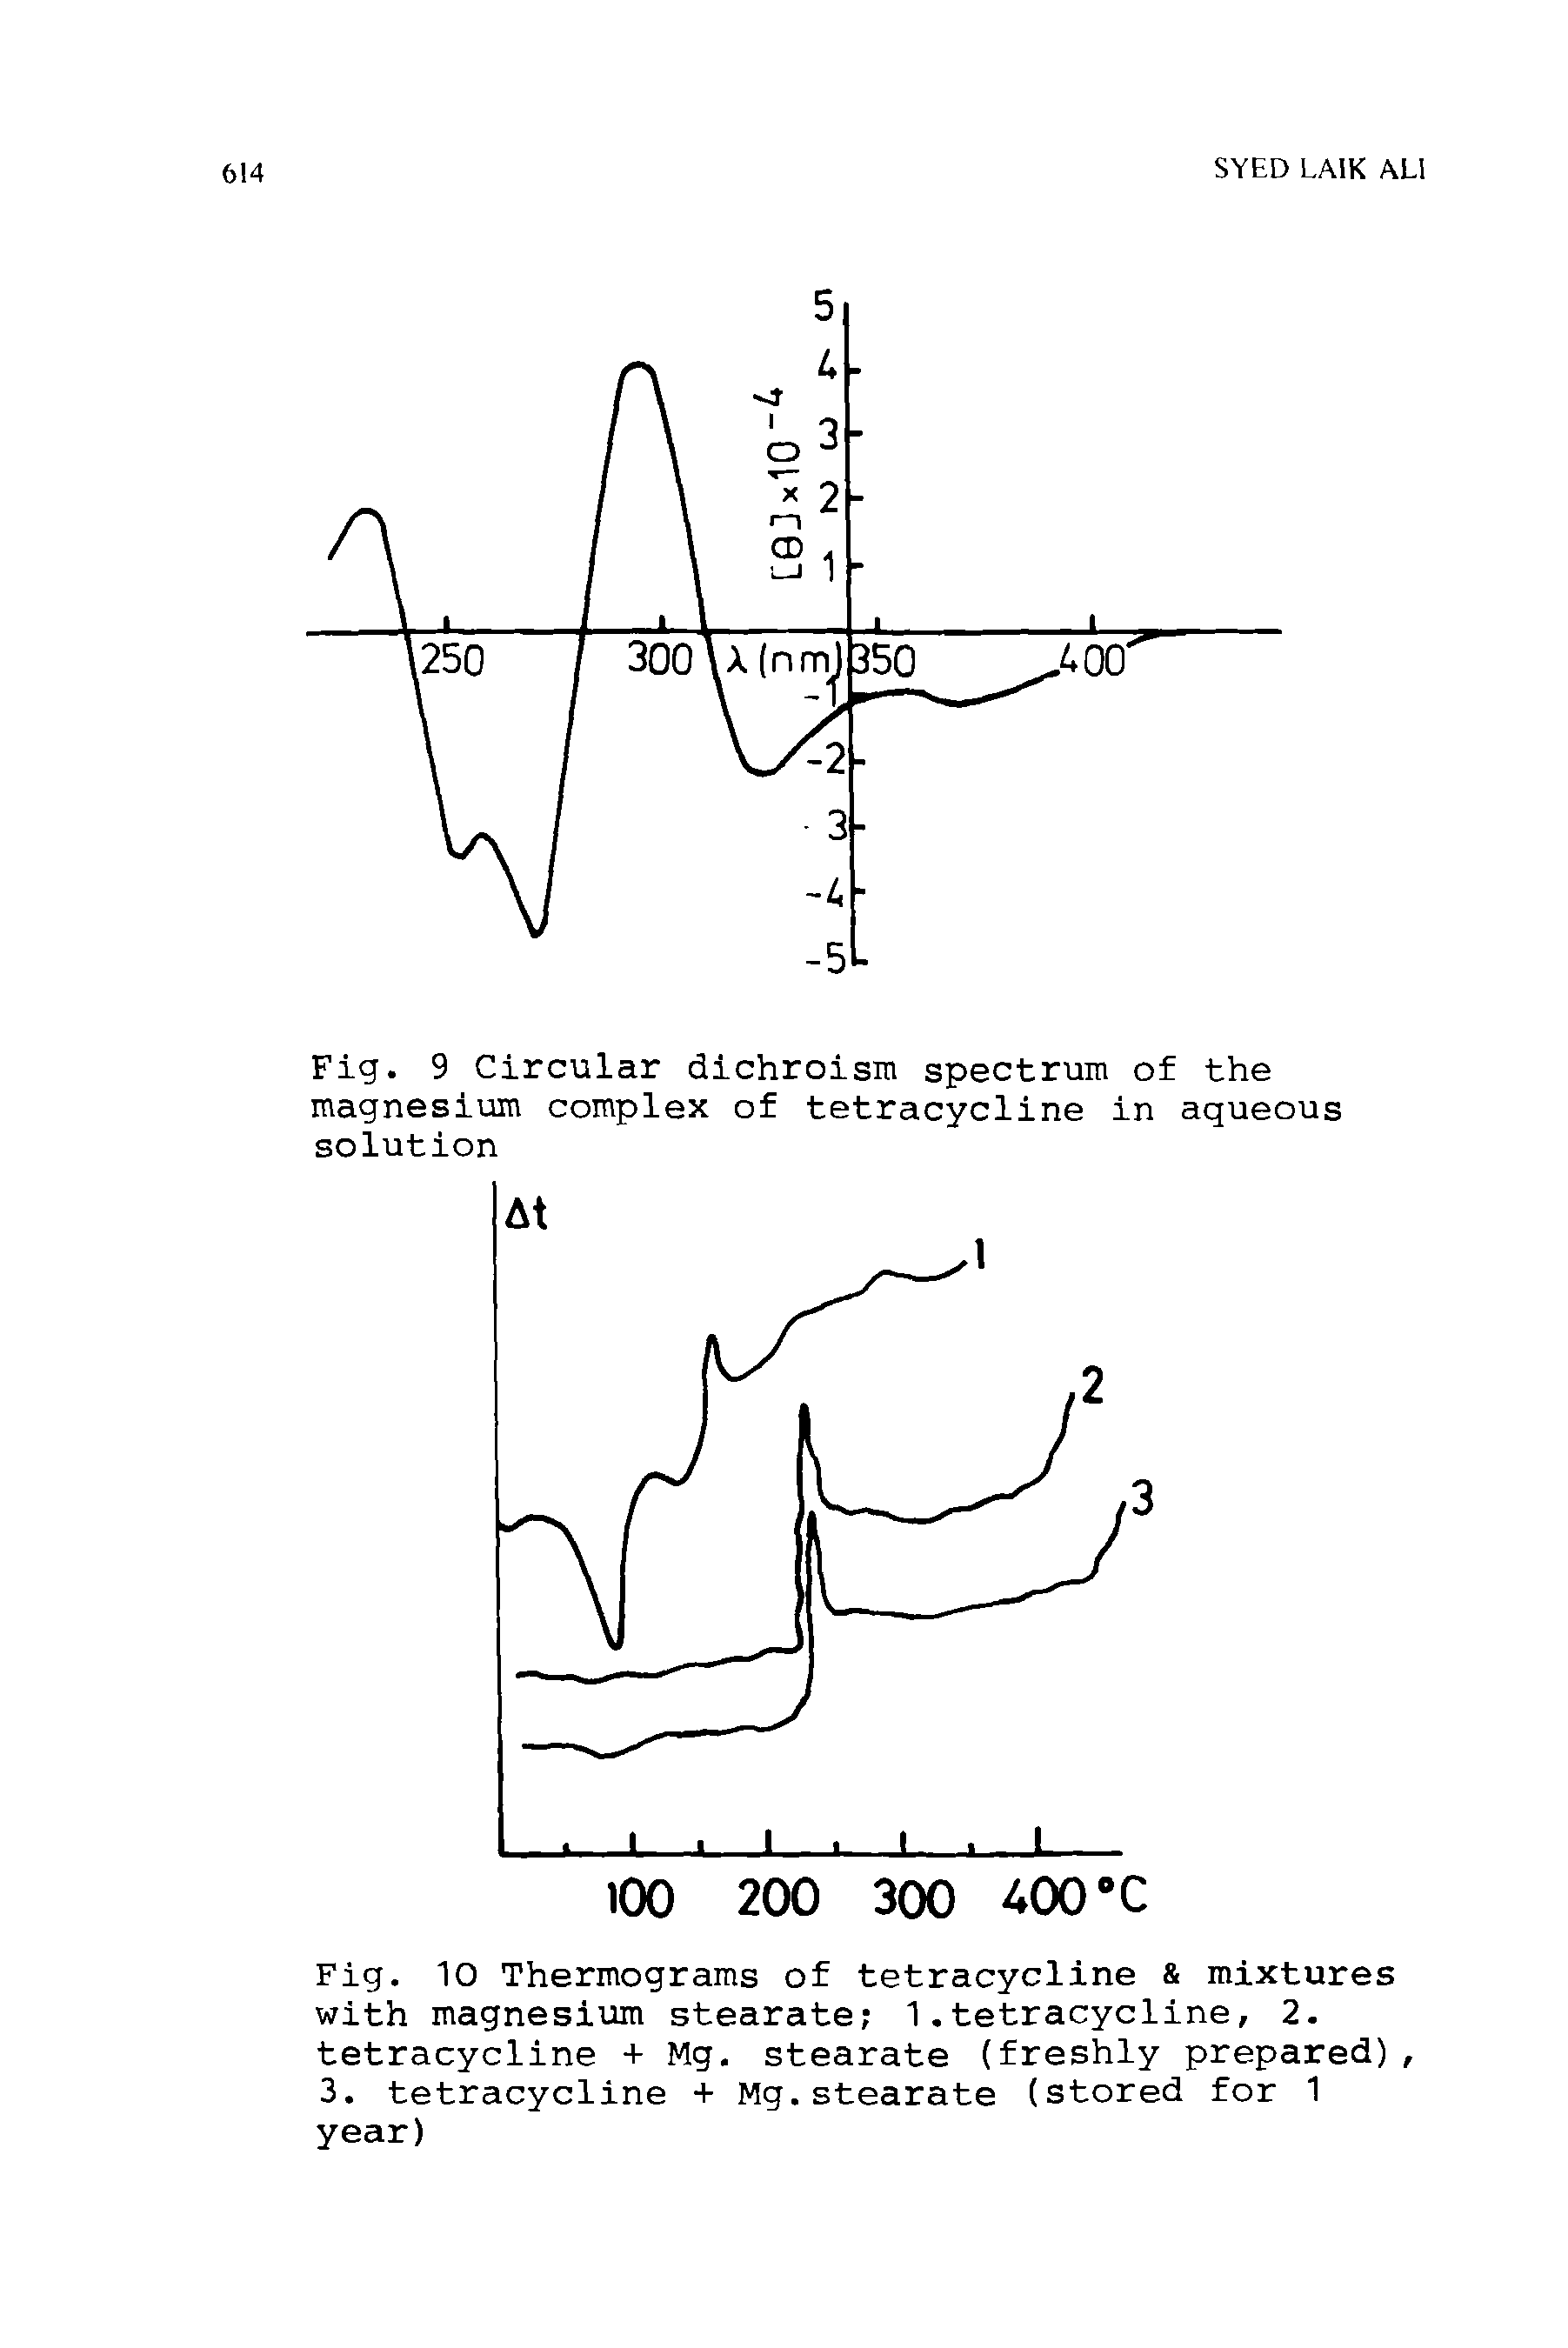 Fig. 9 Circular dichroism spectrum of the magnesium complex of tetracycline in aqueous solution...